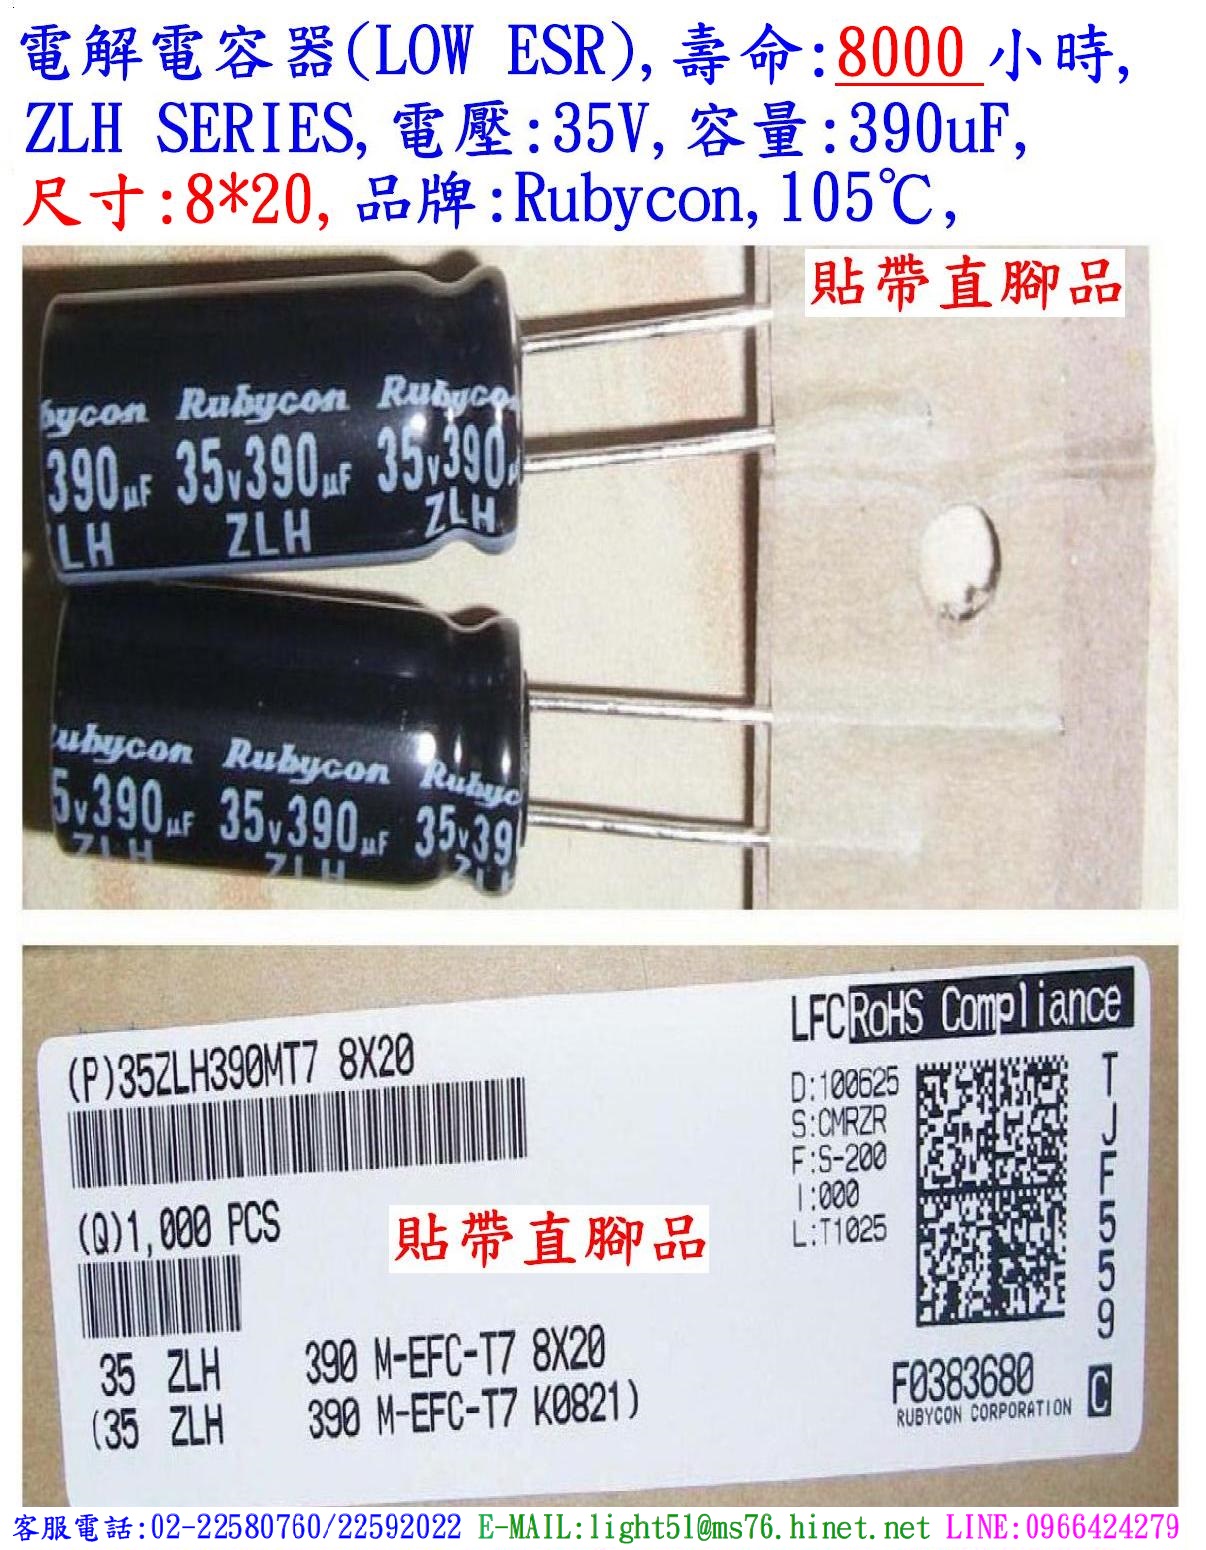 ZLH,35V,390uF,尺寸:8*20,電解電容器(LOW ESR),壽命:8000小時,Rubycon(日本)